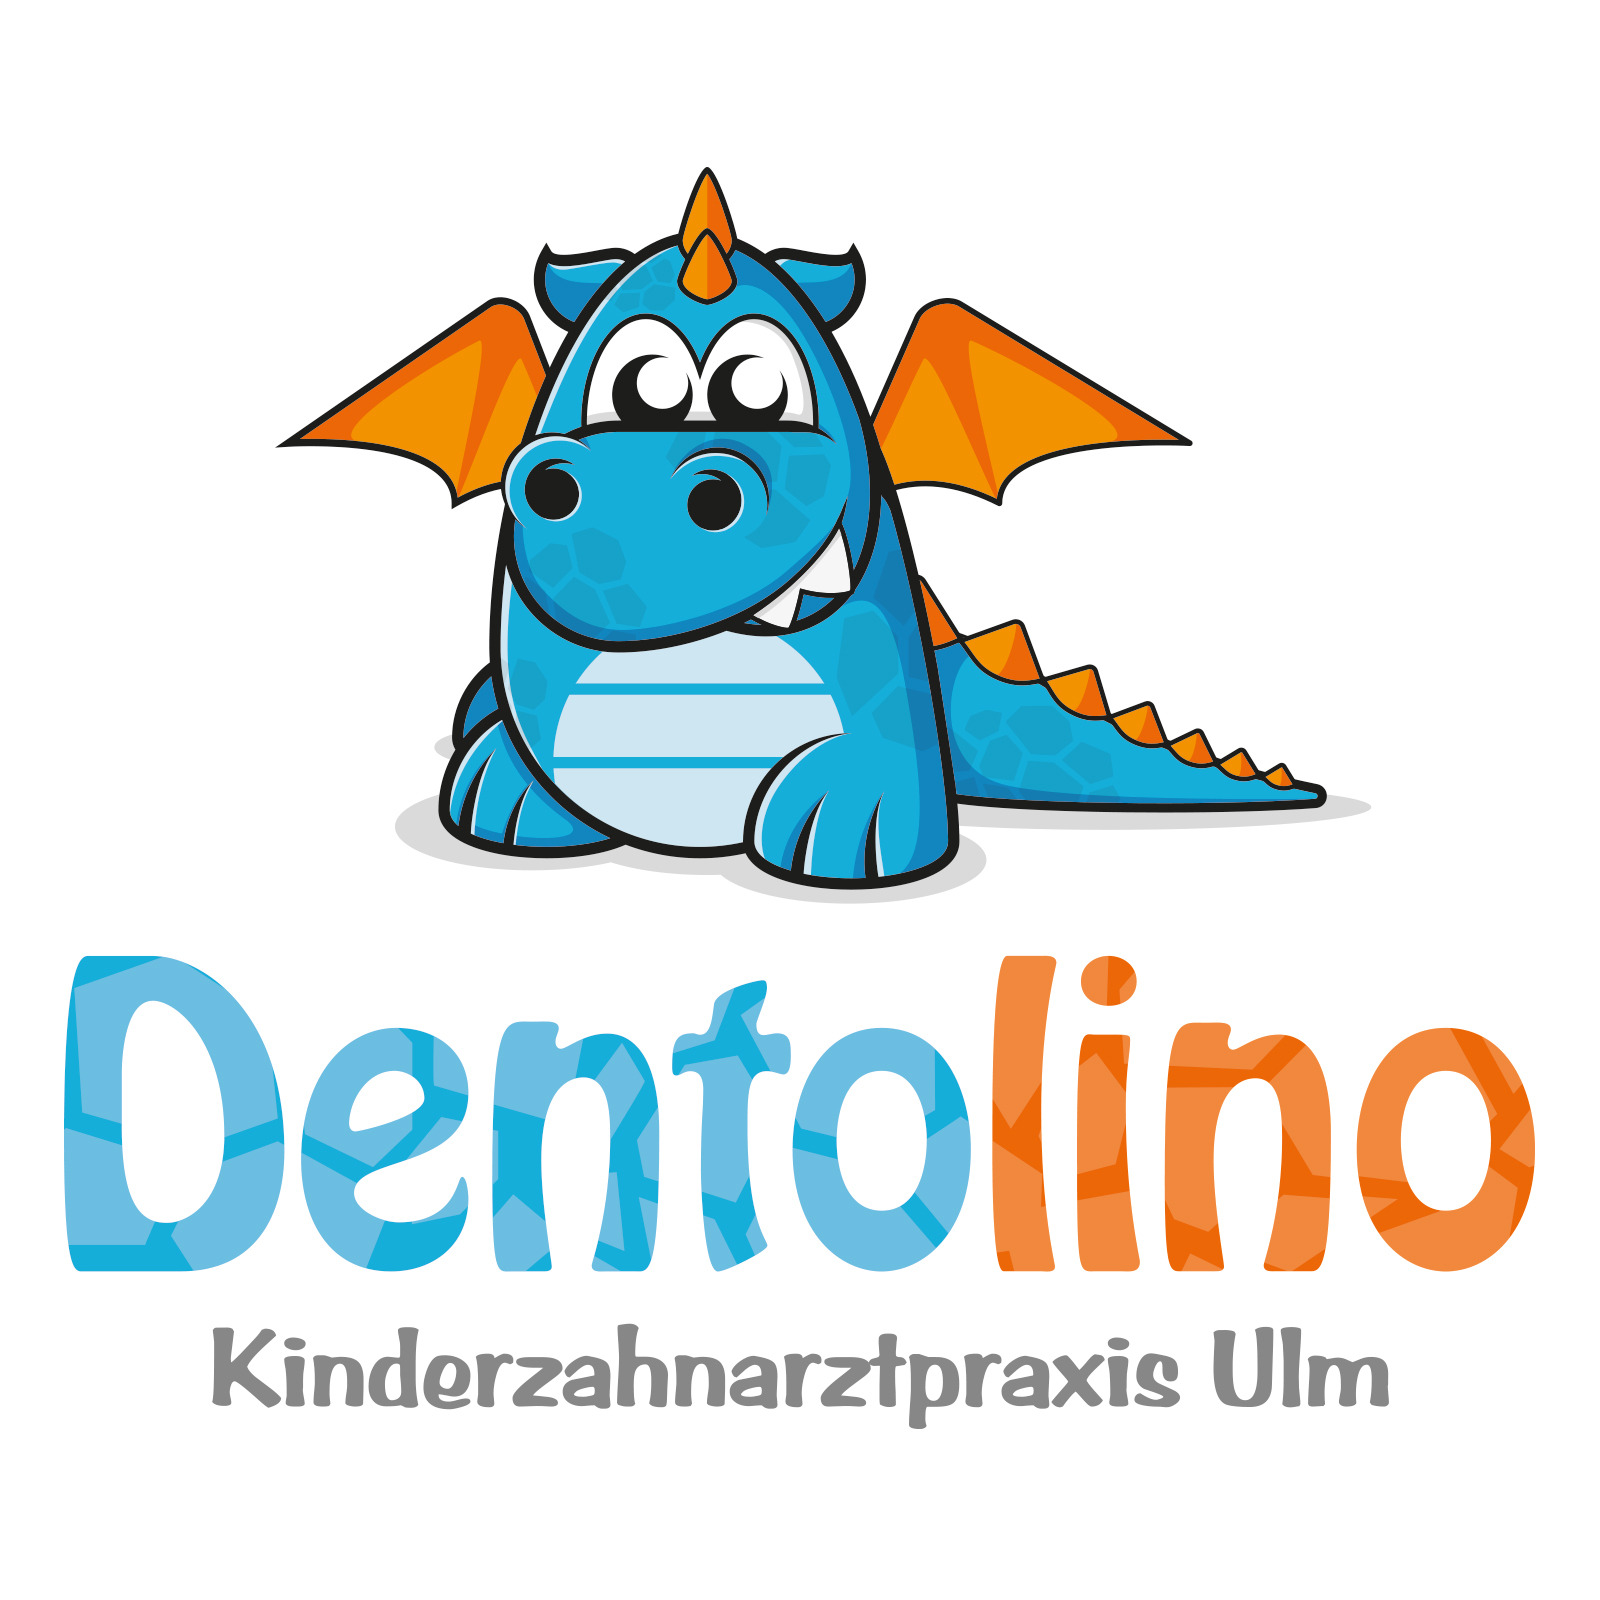 Dentolino - Kinderzahnarztpraxis Ulm in Ulm an der Donau - Logo